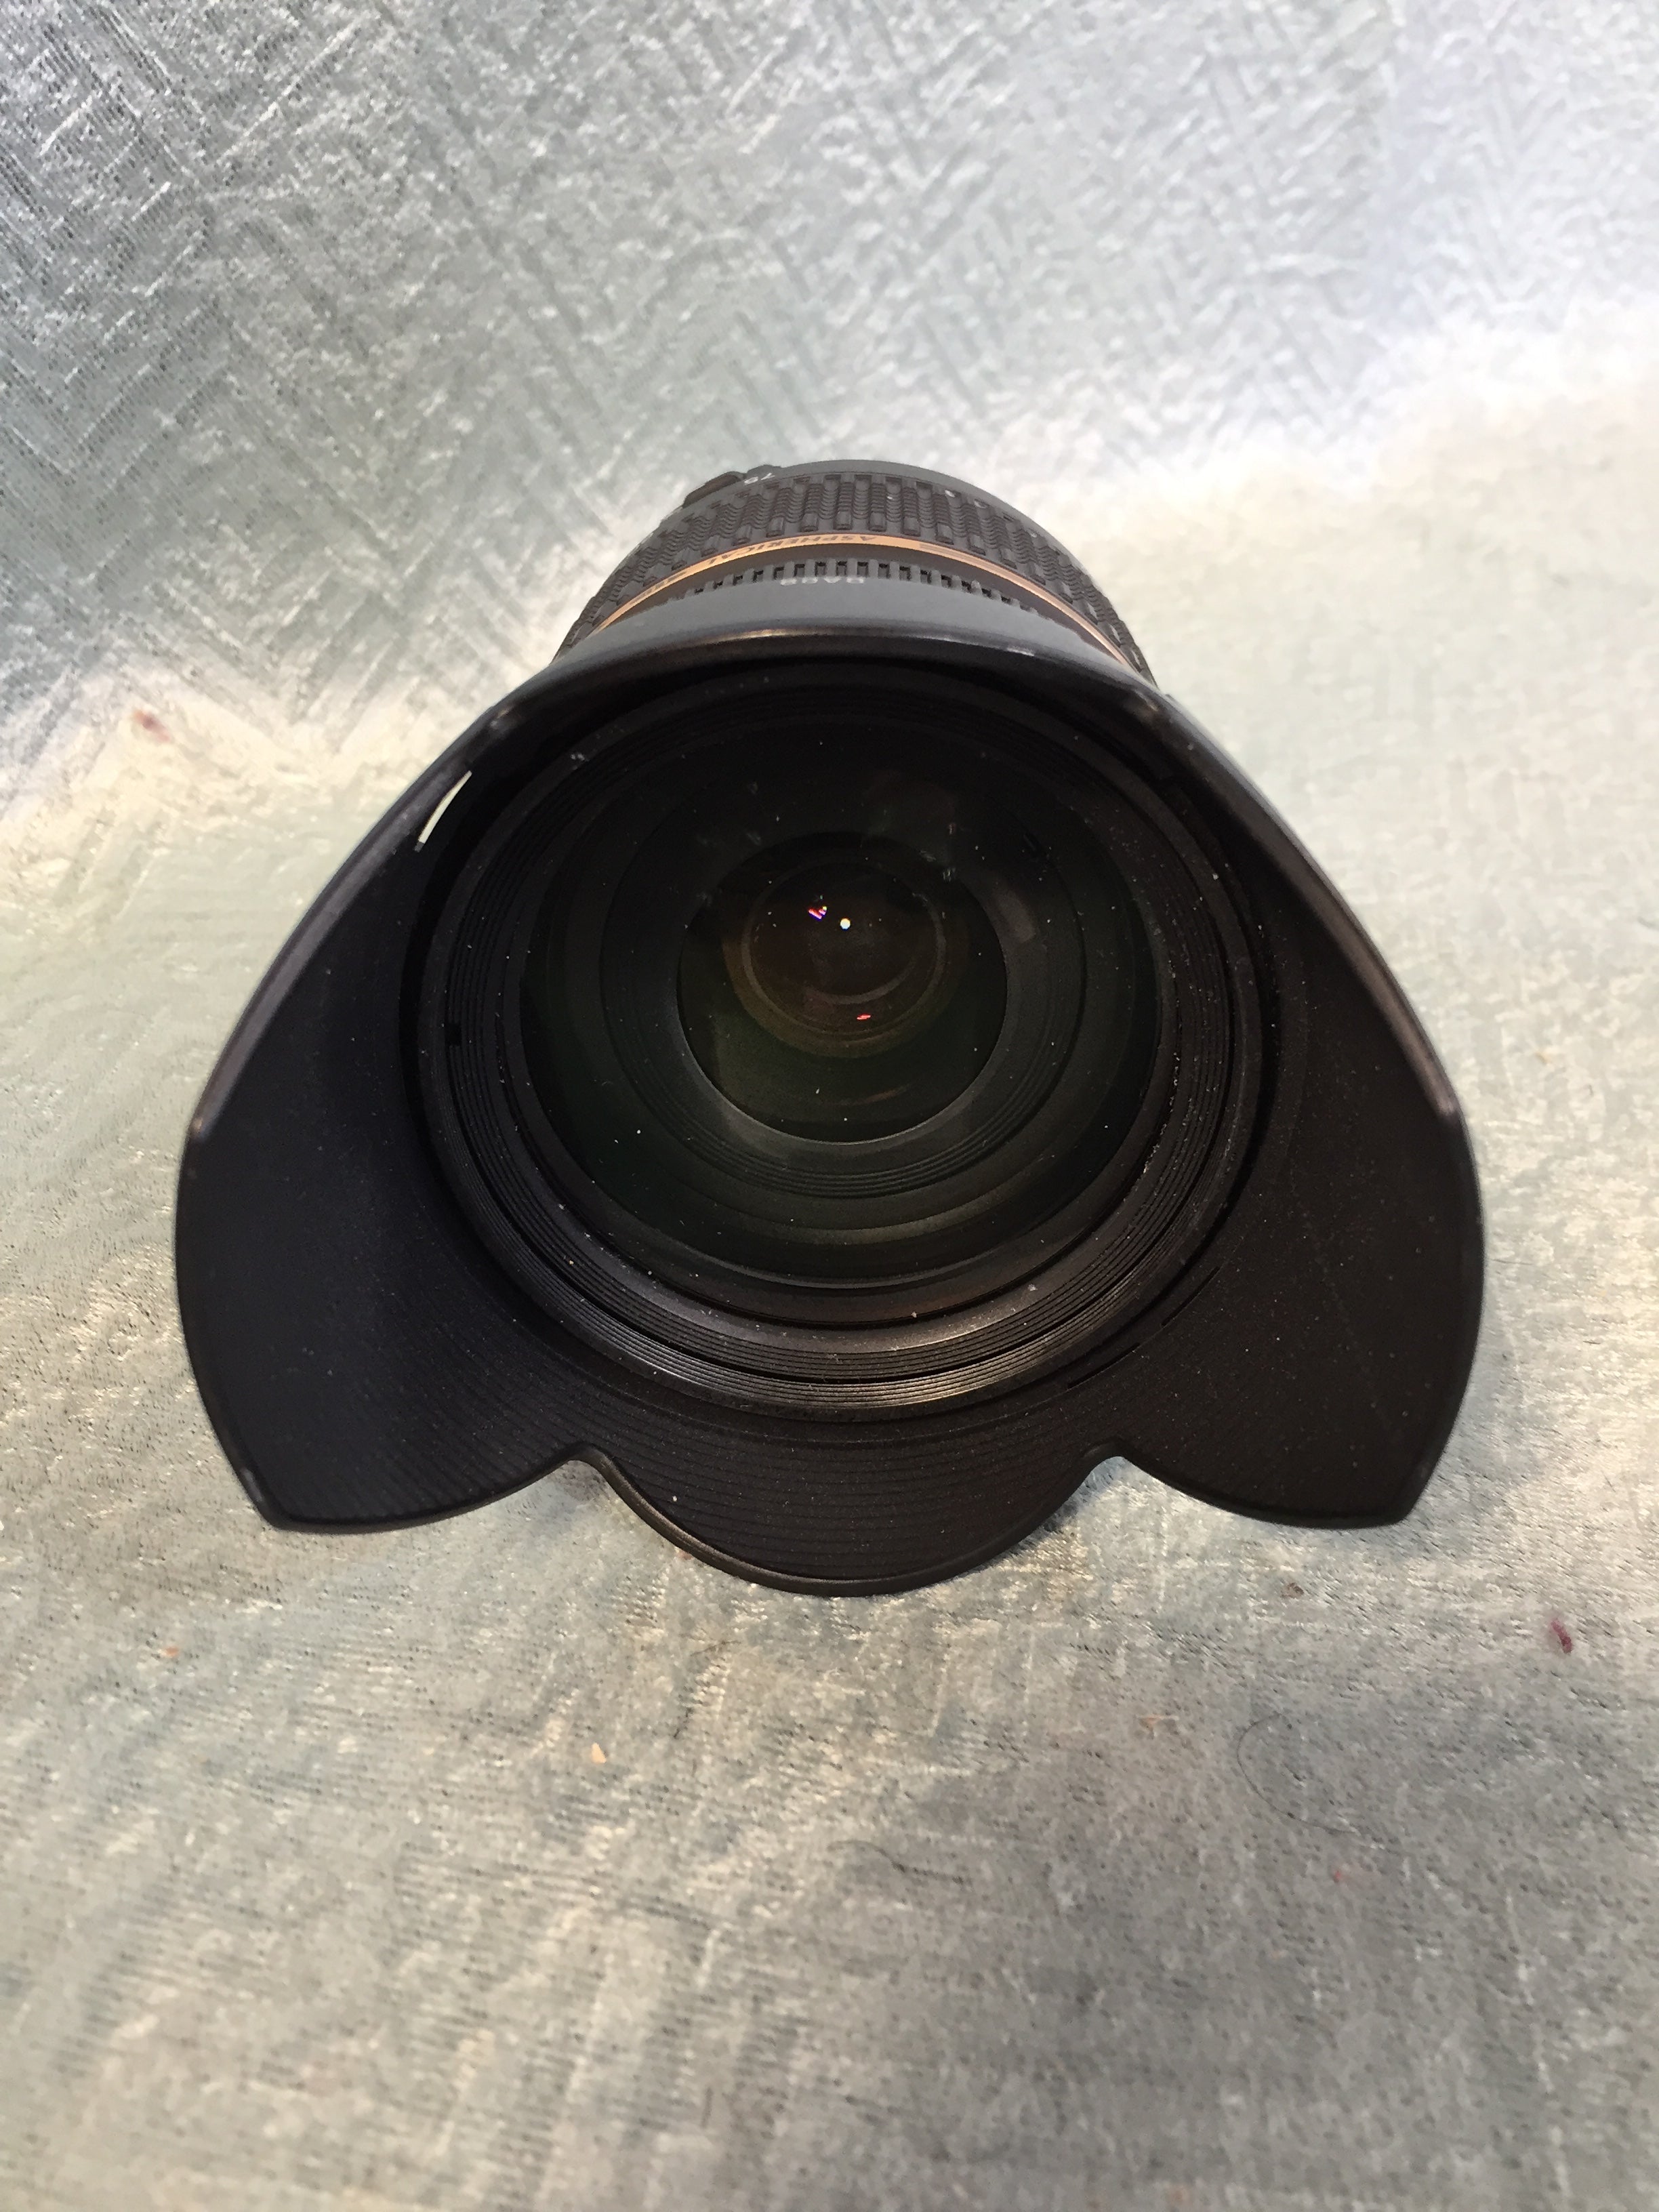 Tamron SP AF 28-75mm F/2.8 XR Di LD Aspherical [IF] Macro Lens for Nikon (7611402944750)